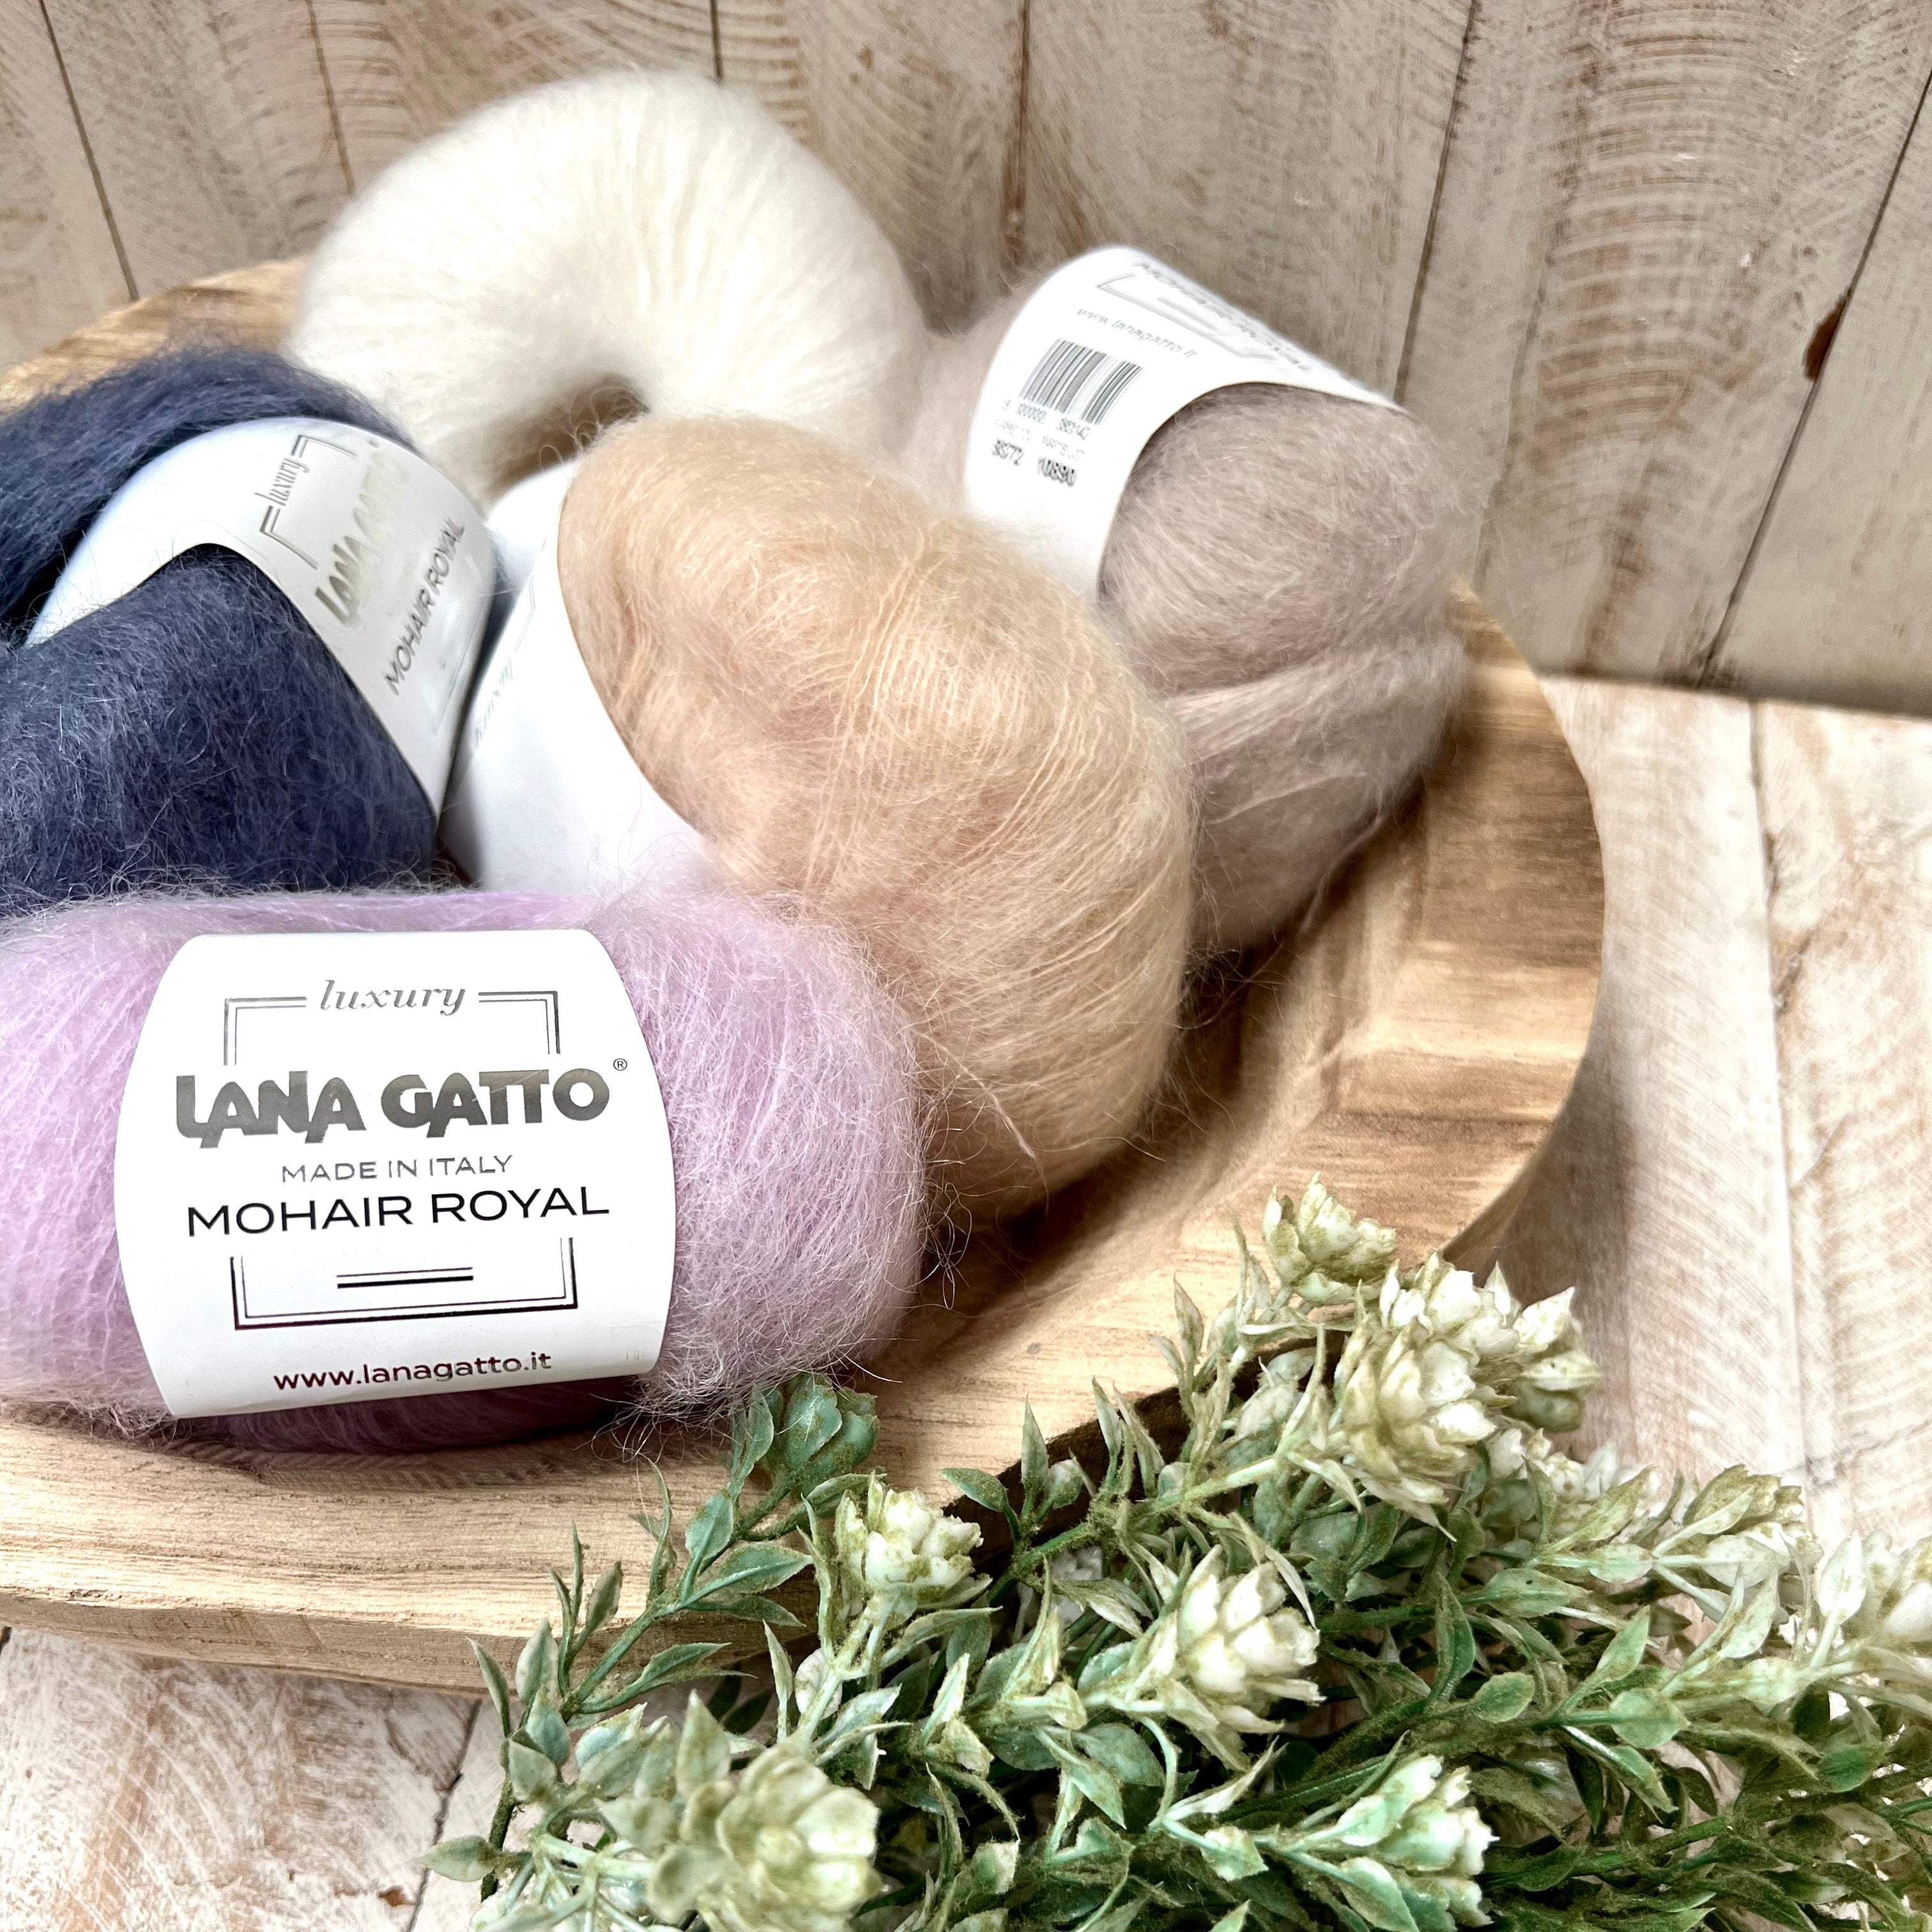 Jojoland Cashmere Laceweight 2-Ply Knitting Yarn - Great Yarn Company